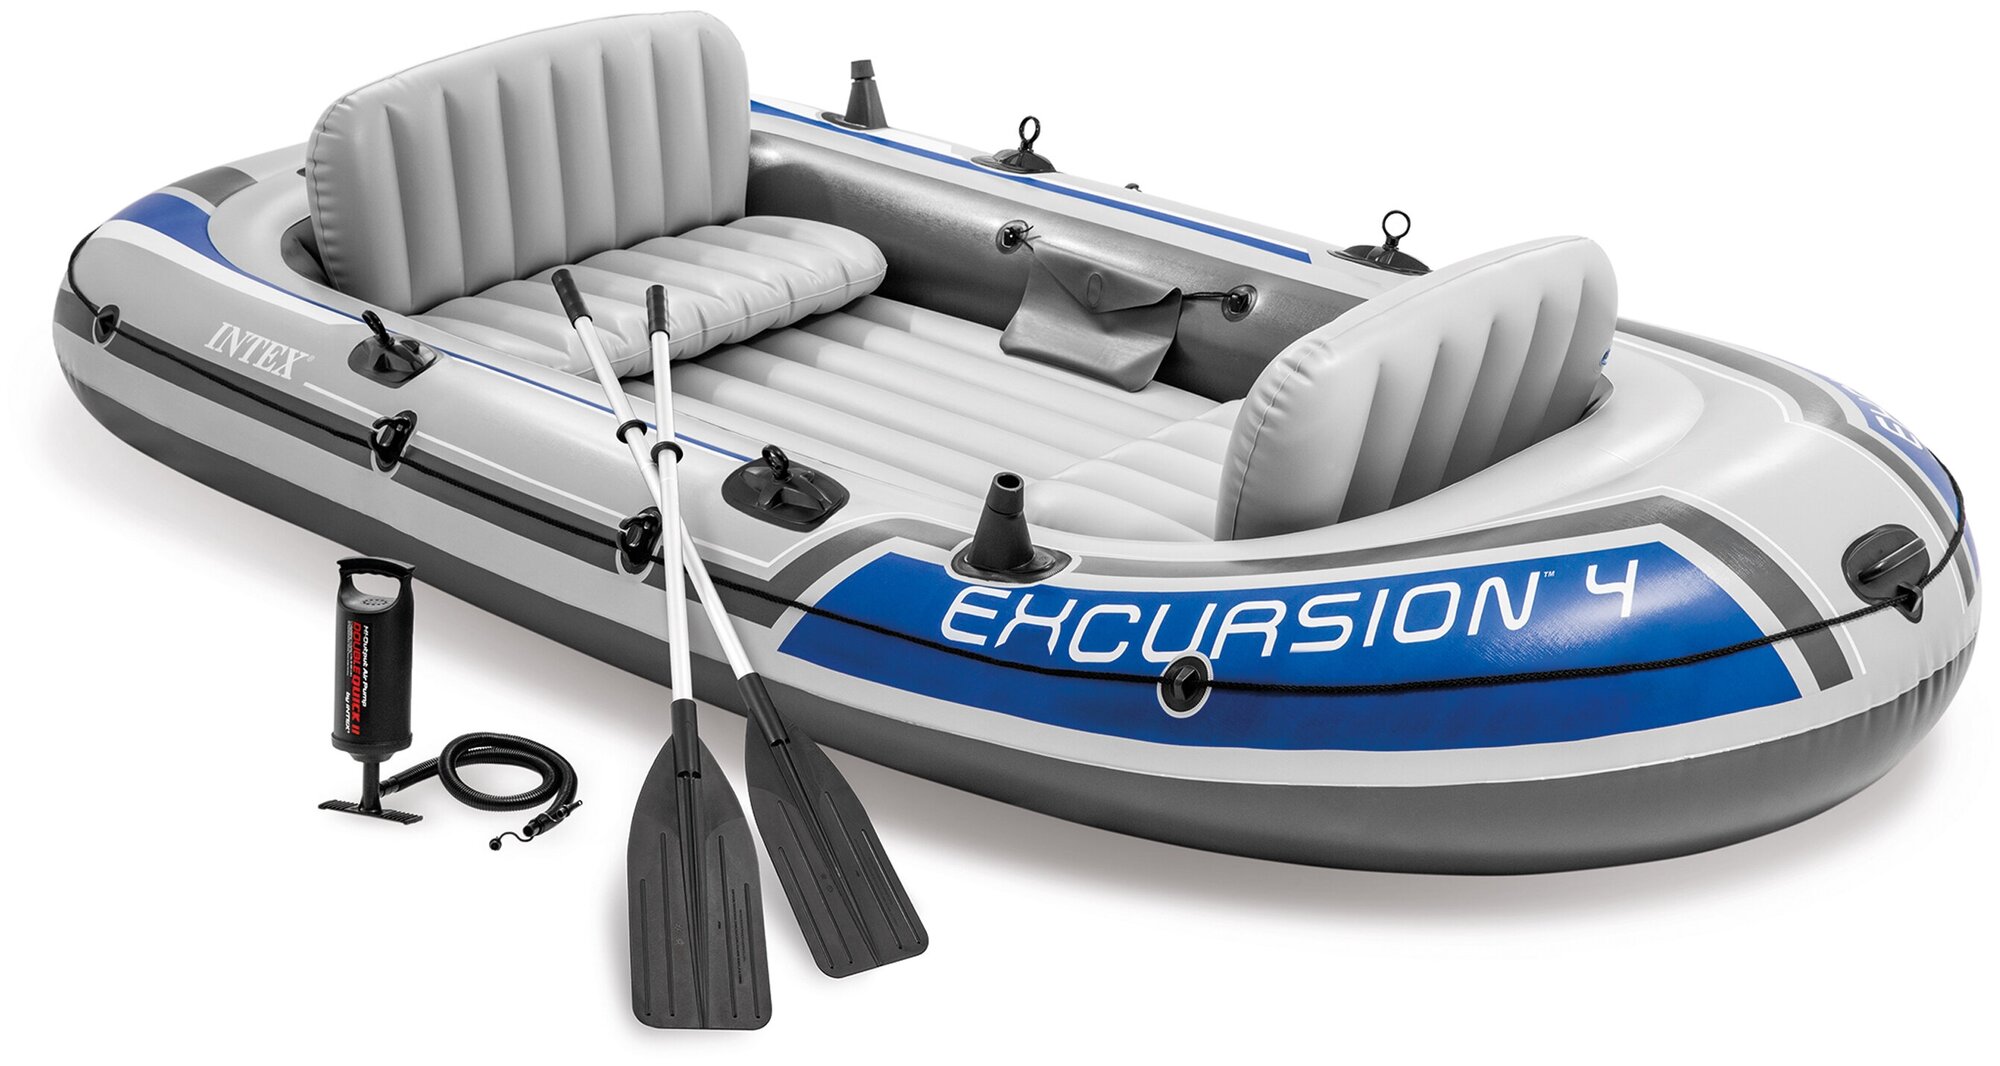 Лодка Excursion 4, 4 местная, 315 х 165 х 43 см, вёсла, насос, до 500 кг, 68324NP INTEX